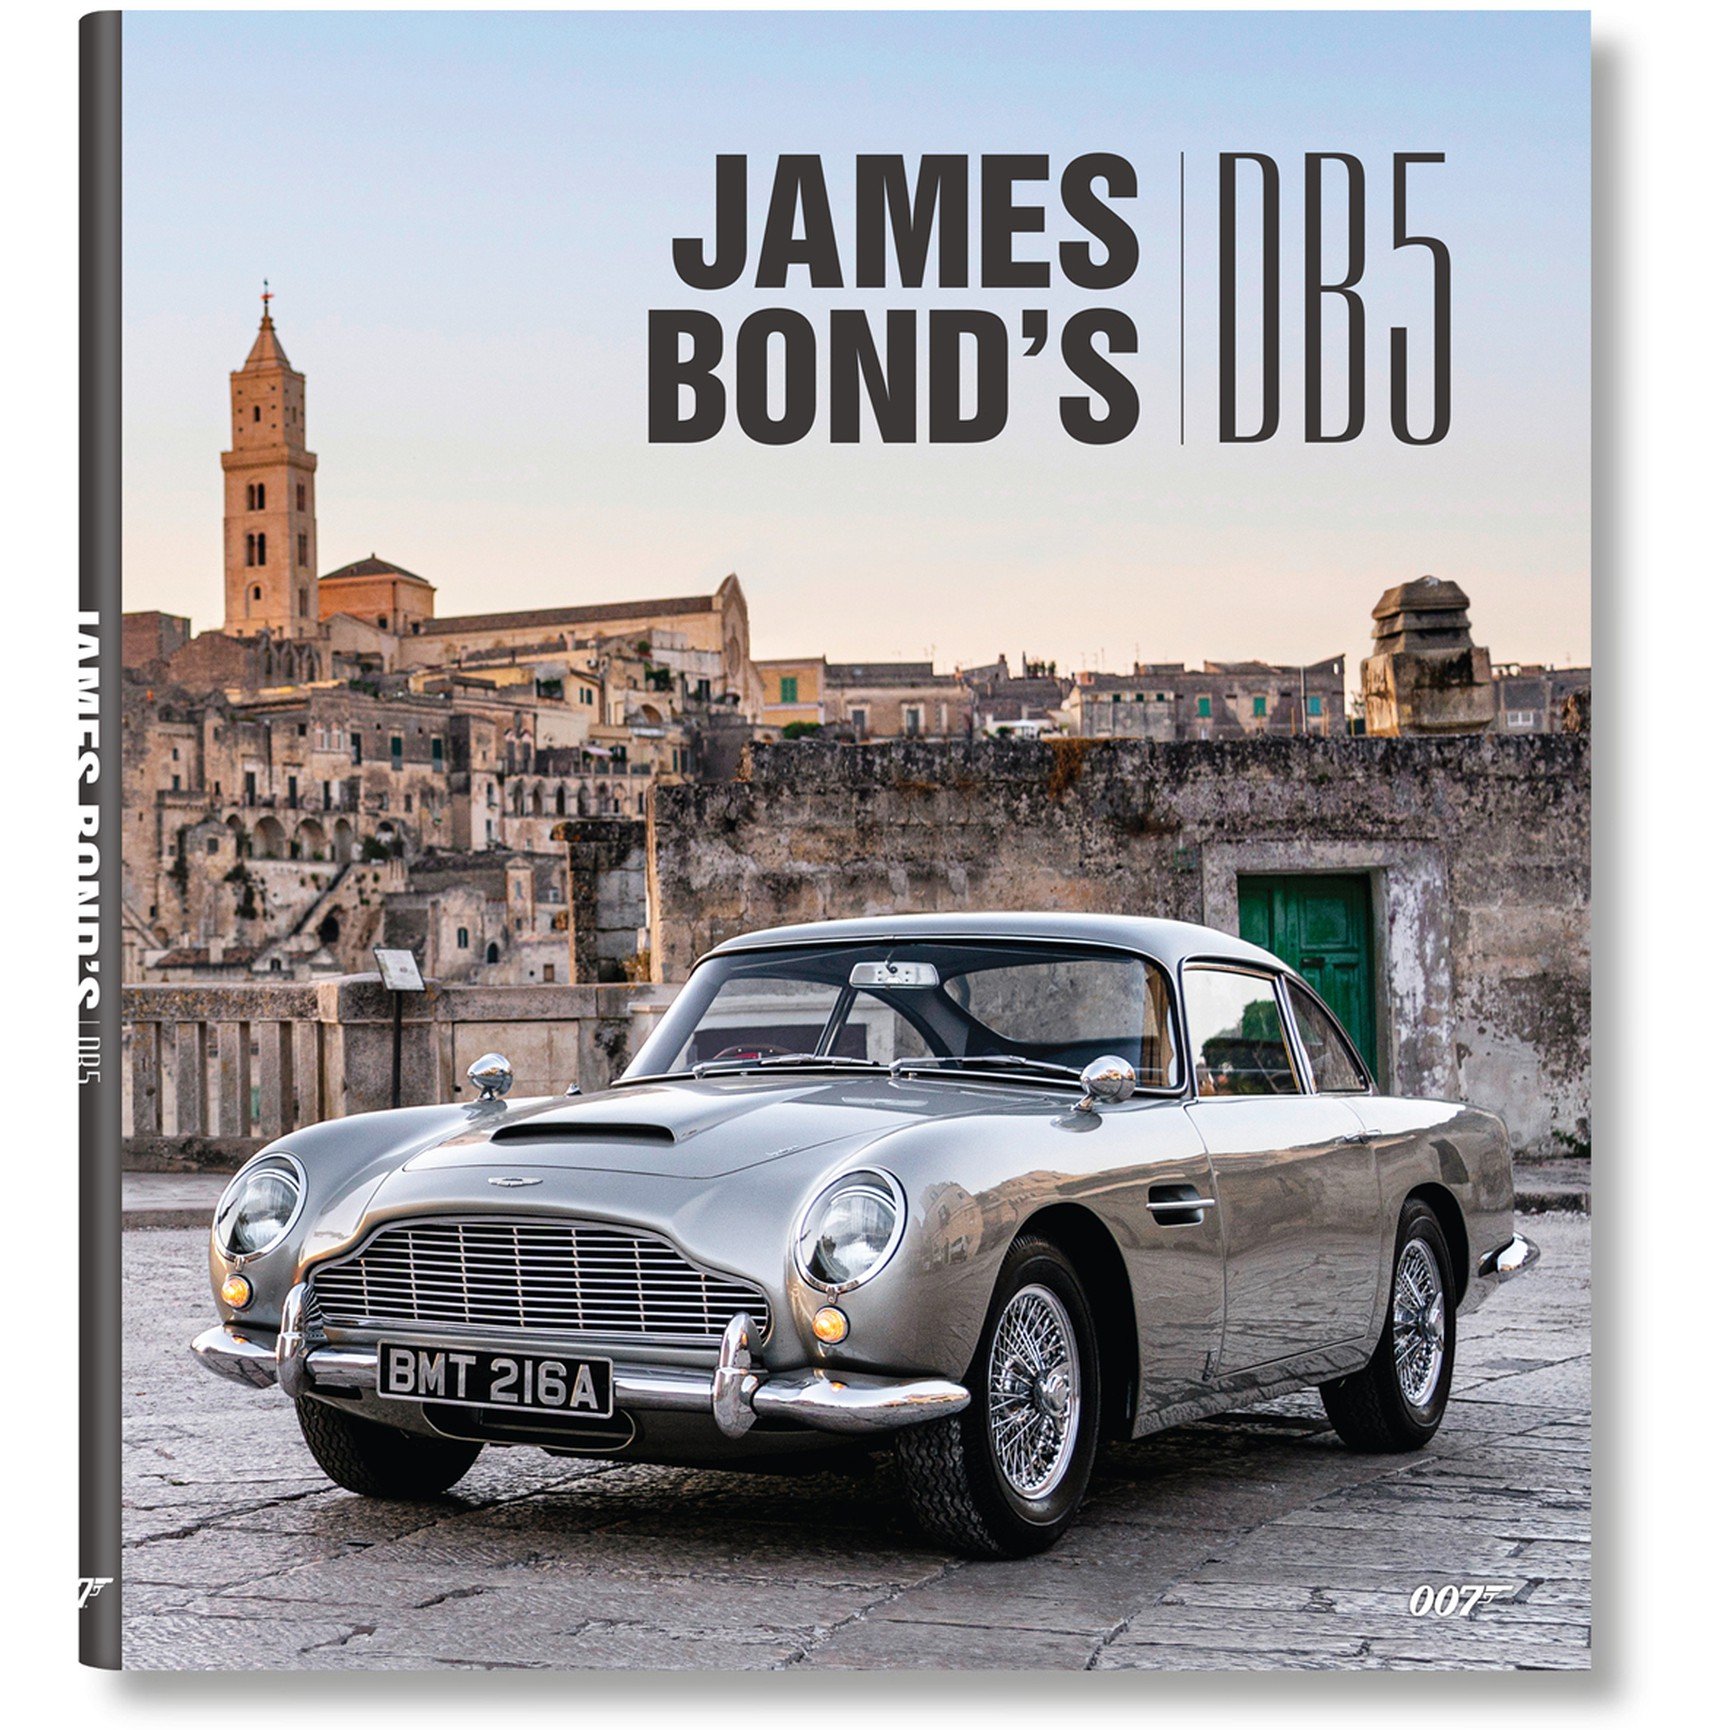 James Bond's DB5 book review